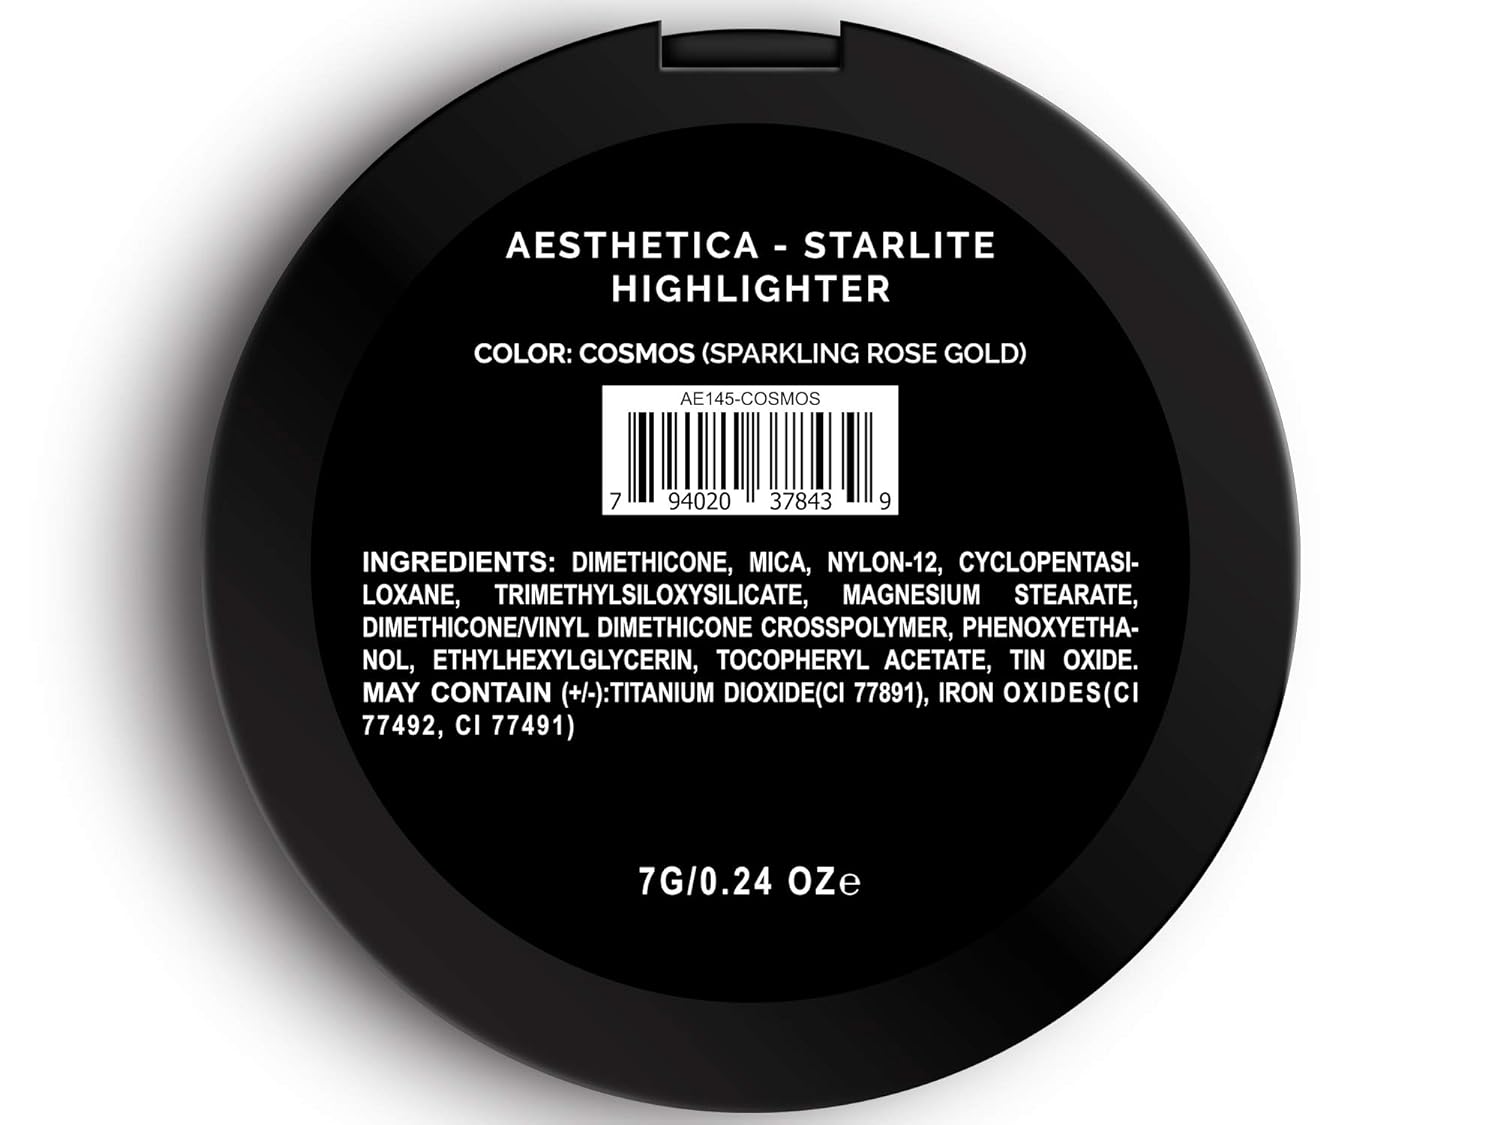  Aesthetica Starlite Highlighter - Metallic Shimmer Highlighting Makeup Powder - Cosmos (Sparkling Rose Gold)